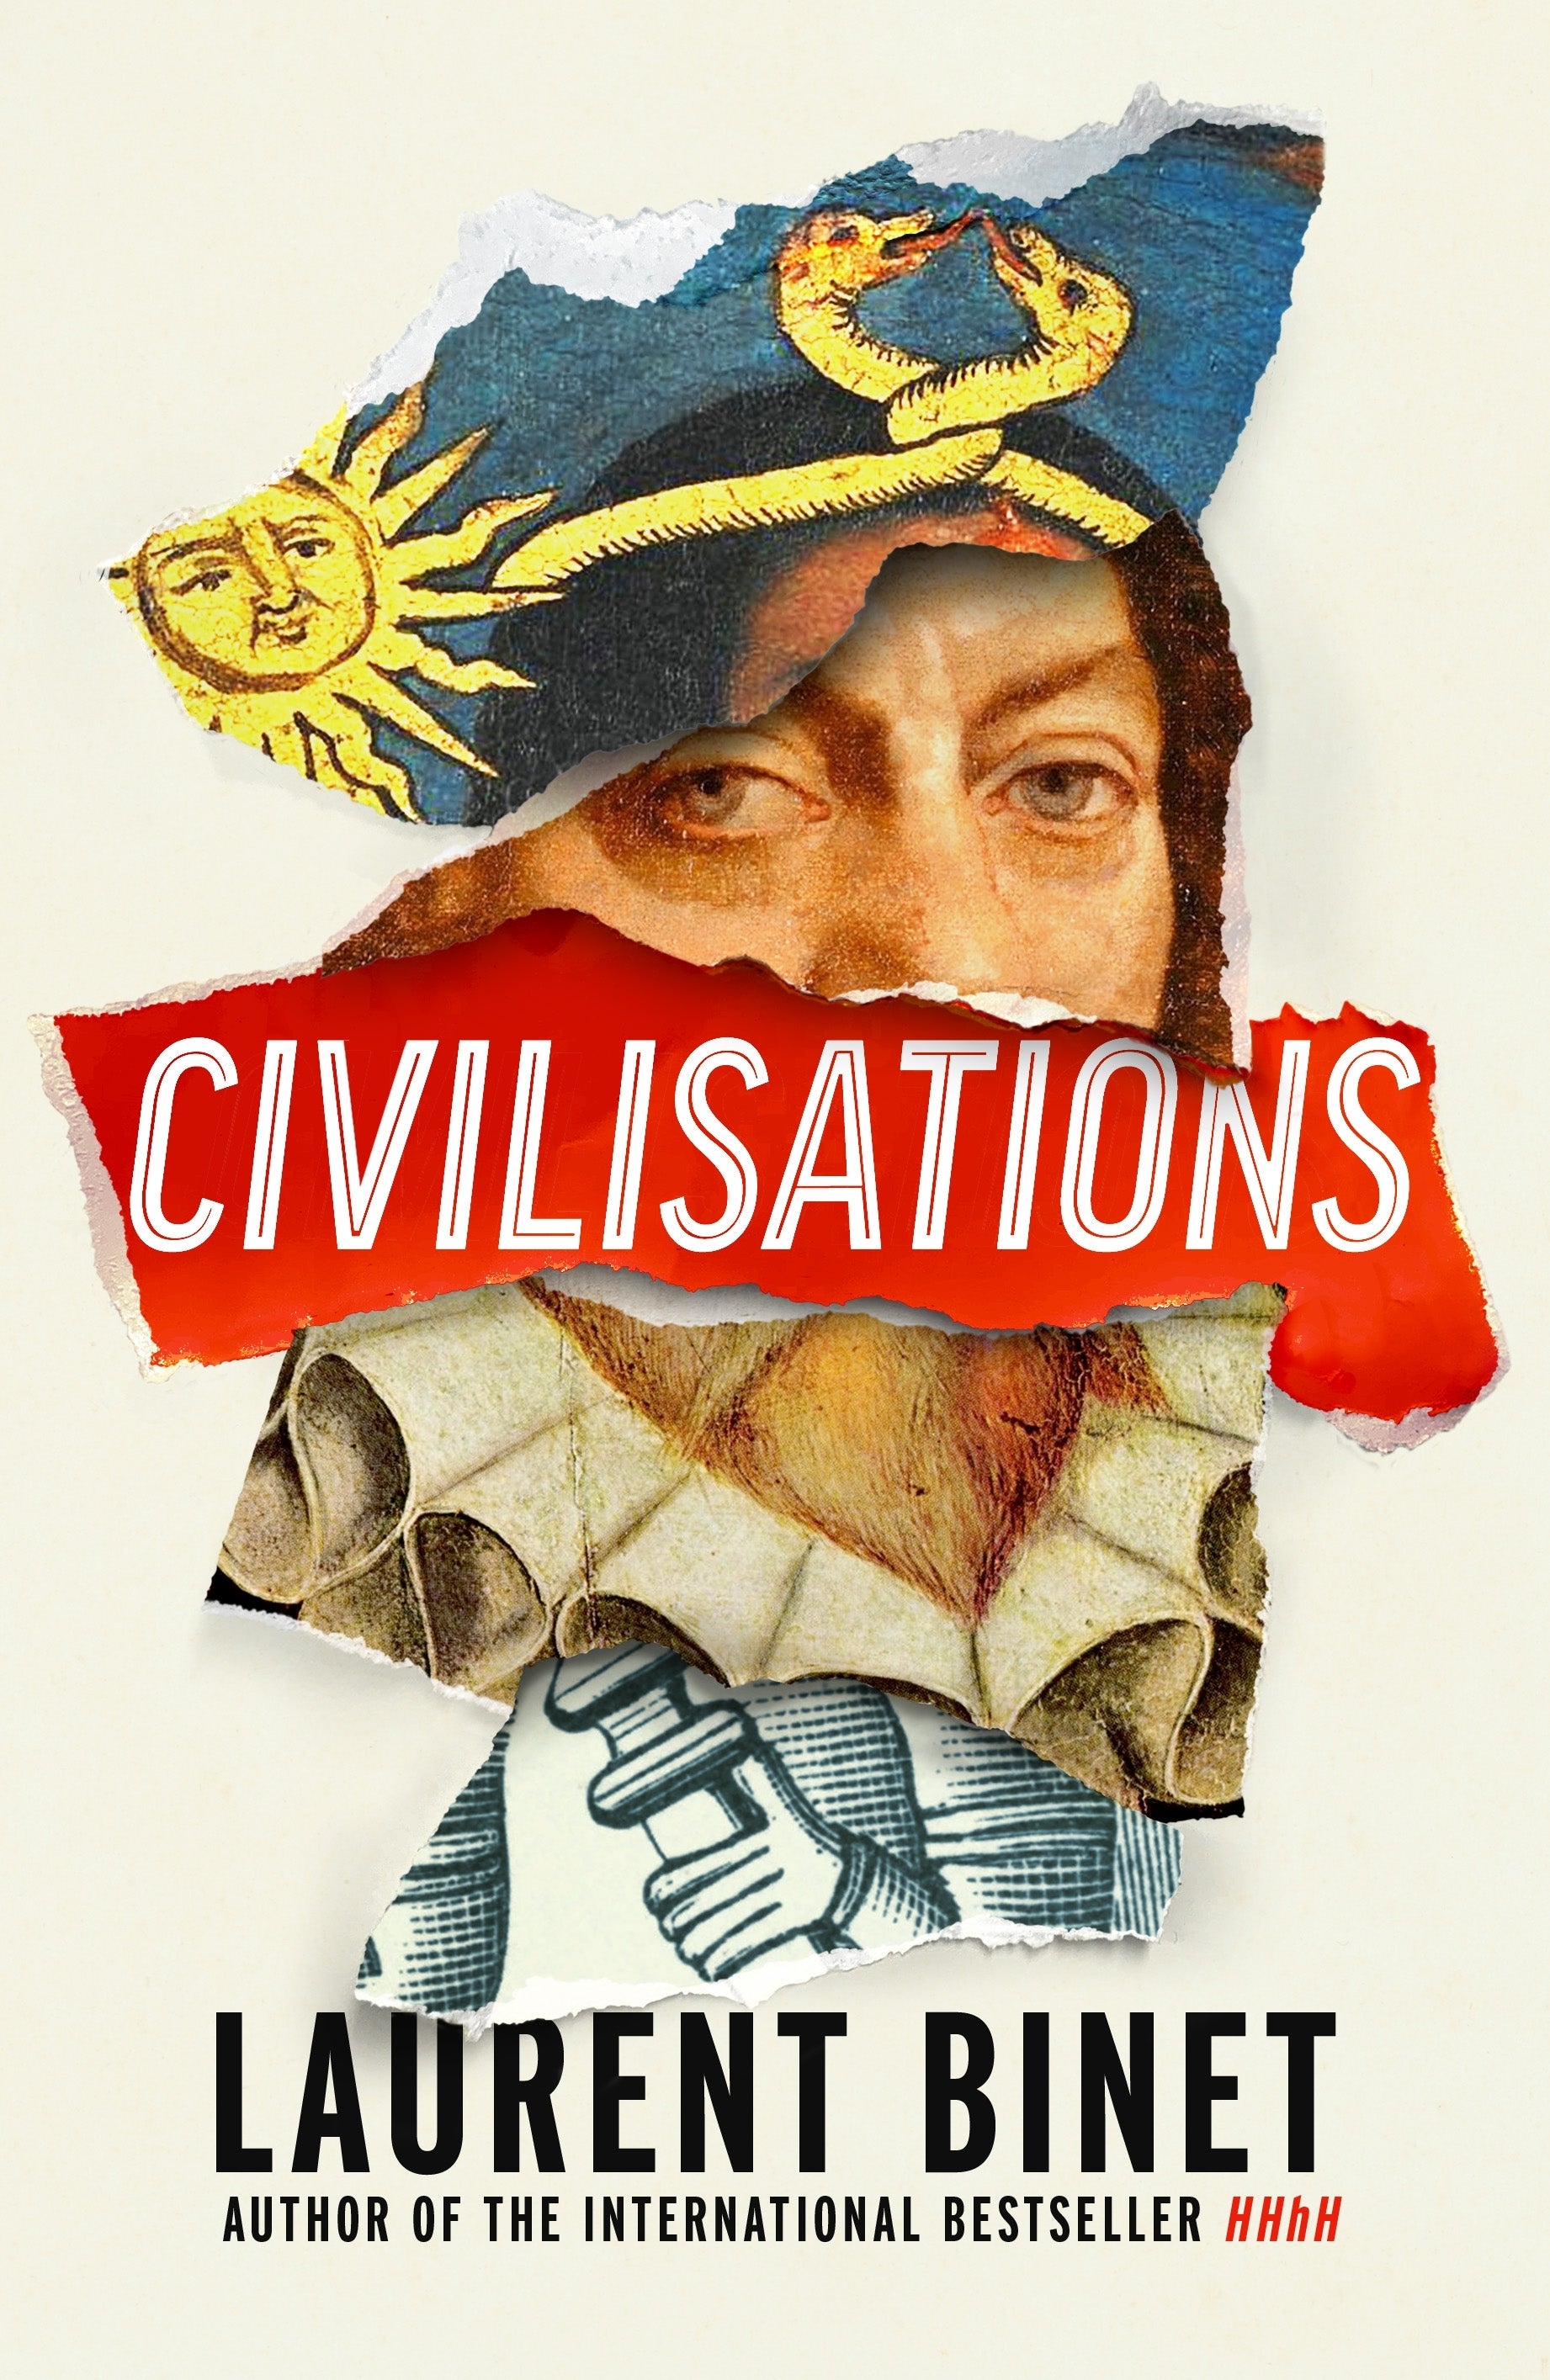 Civilisations by Laurent Binet Trade Paperback $32.99